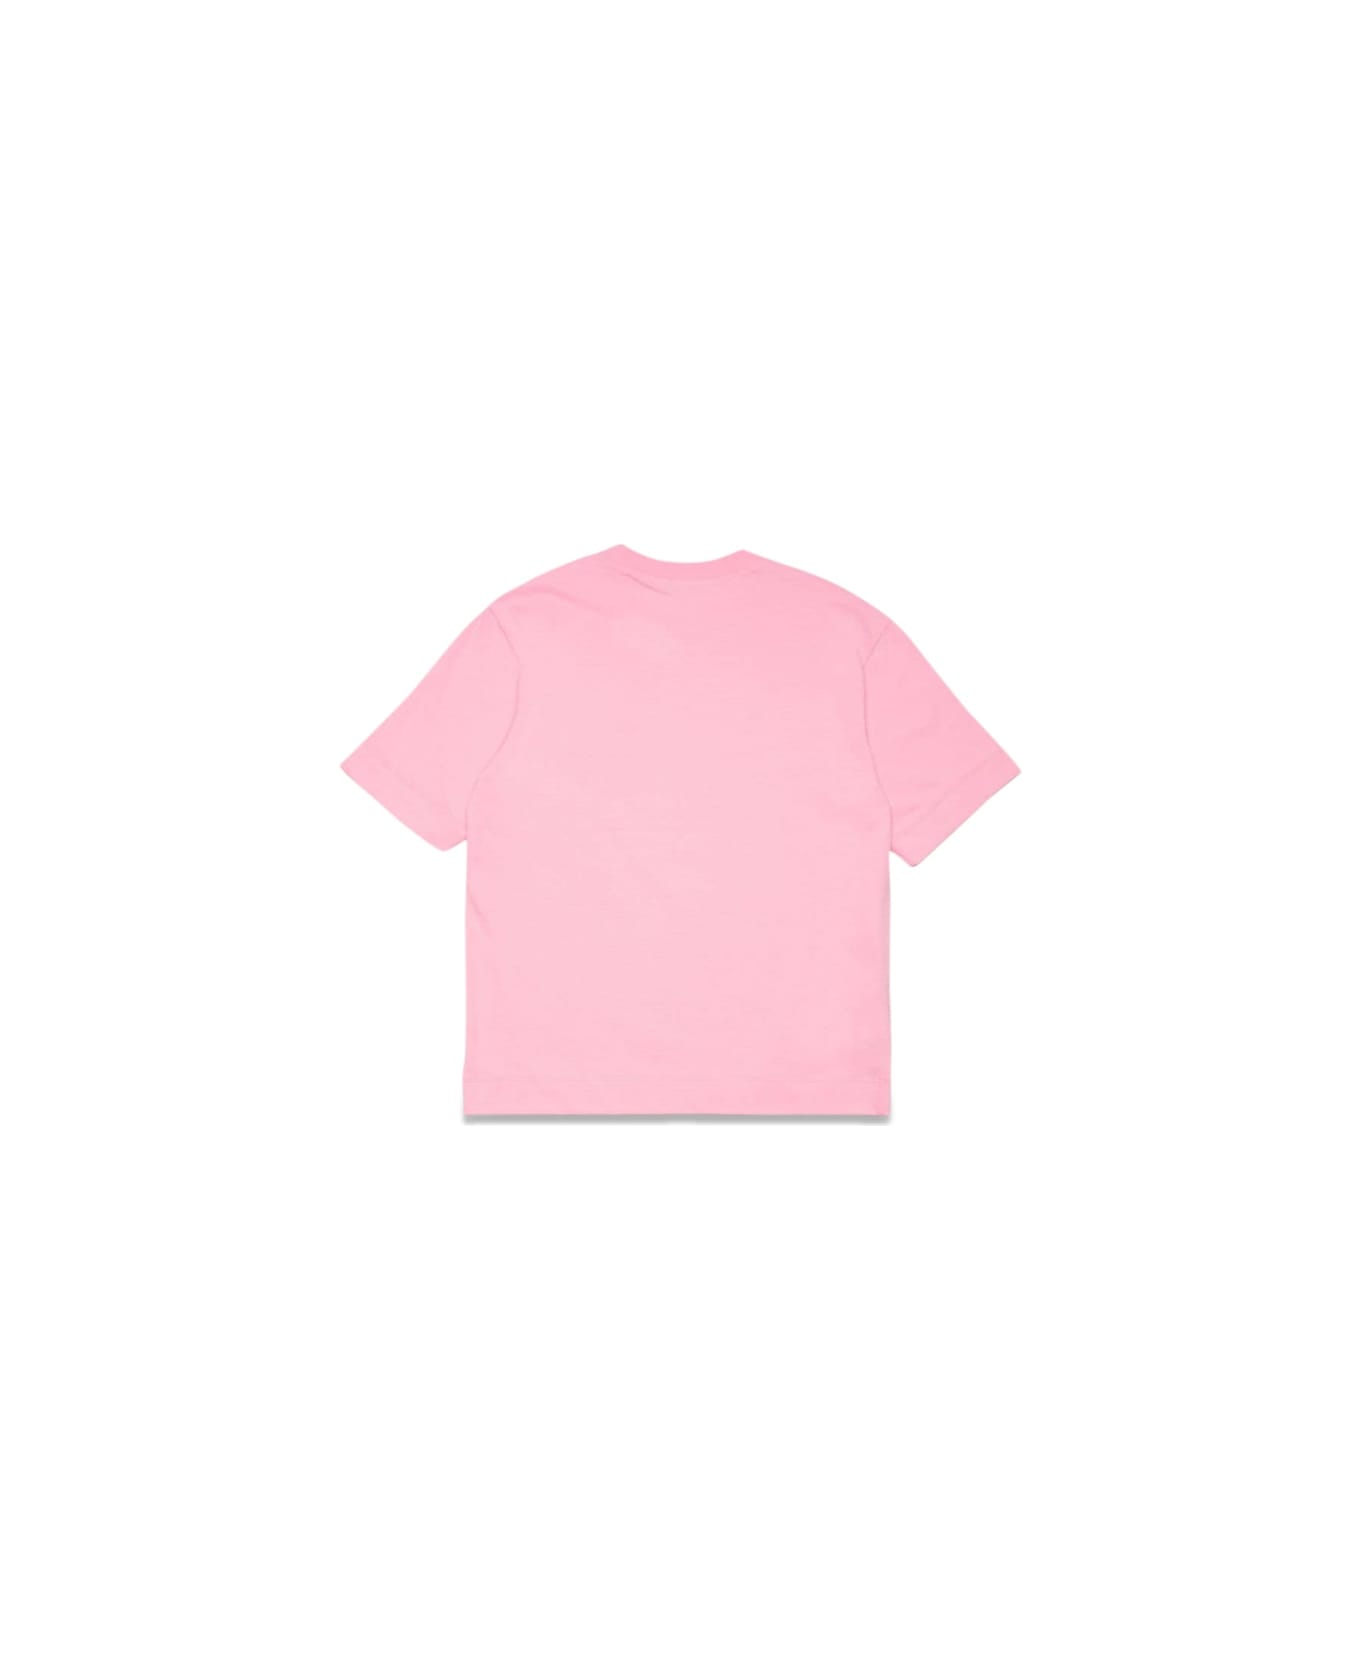 Marni T-shirt - PINK